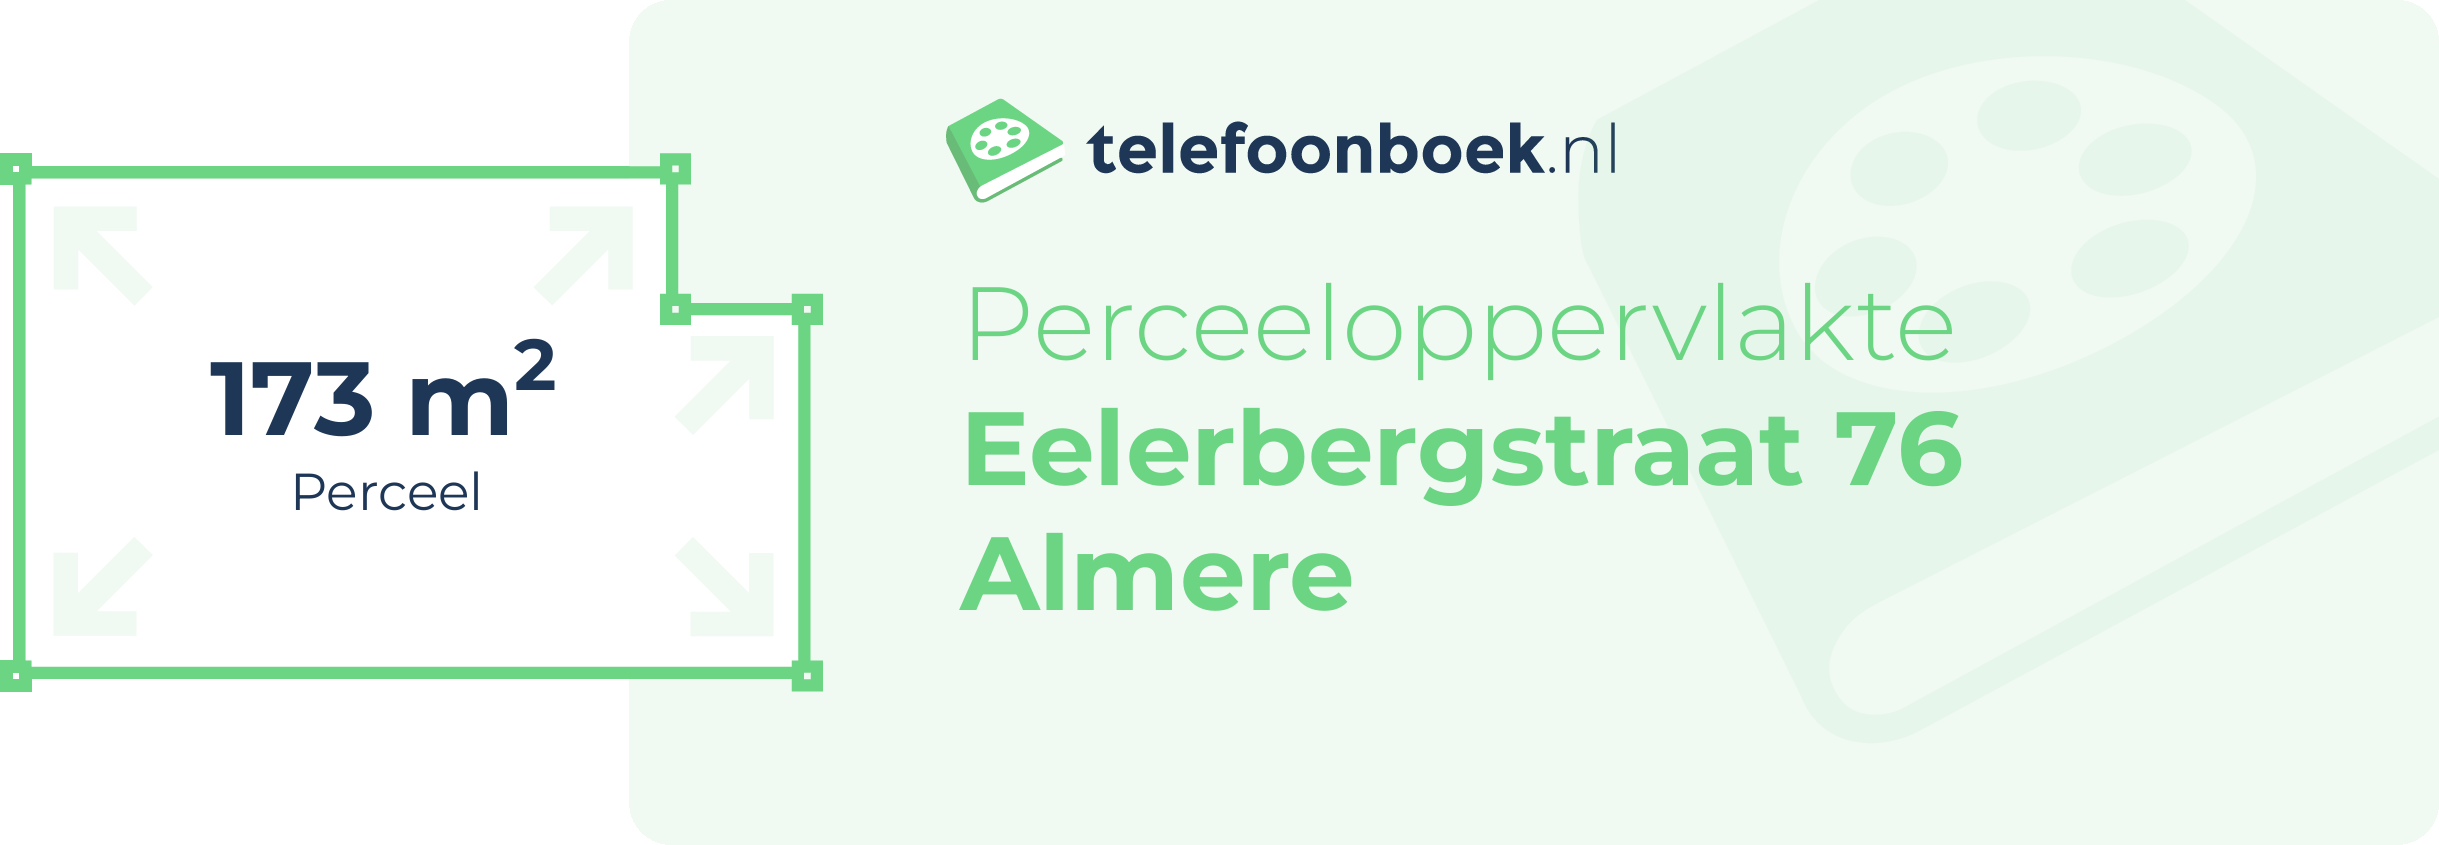 Perceeloppervlakte Eelerbergstraat 76 Almere